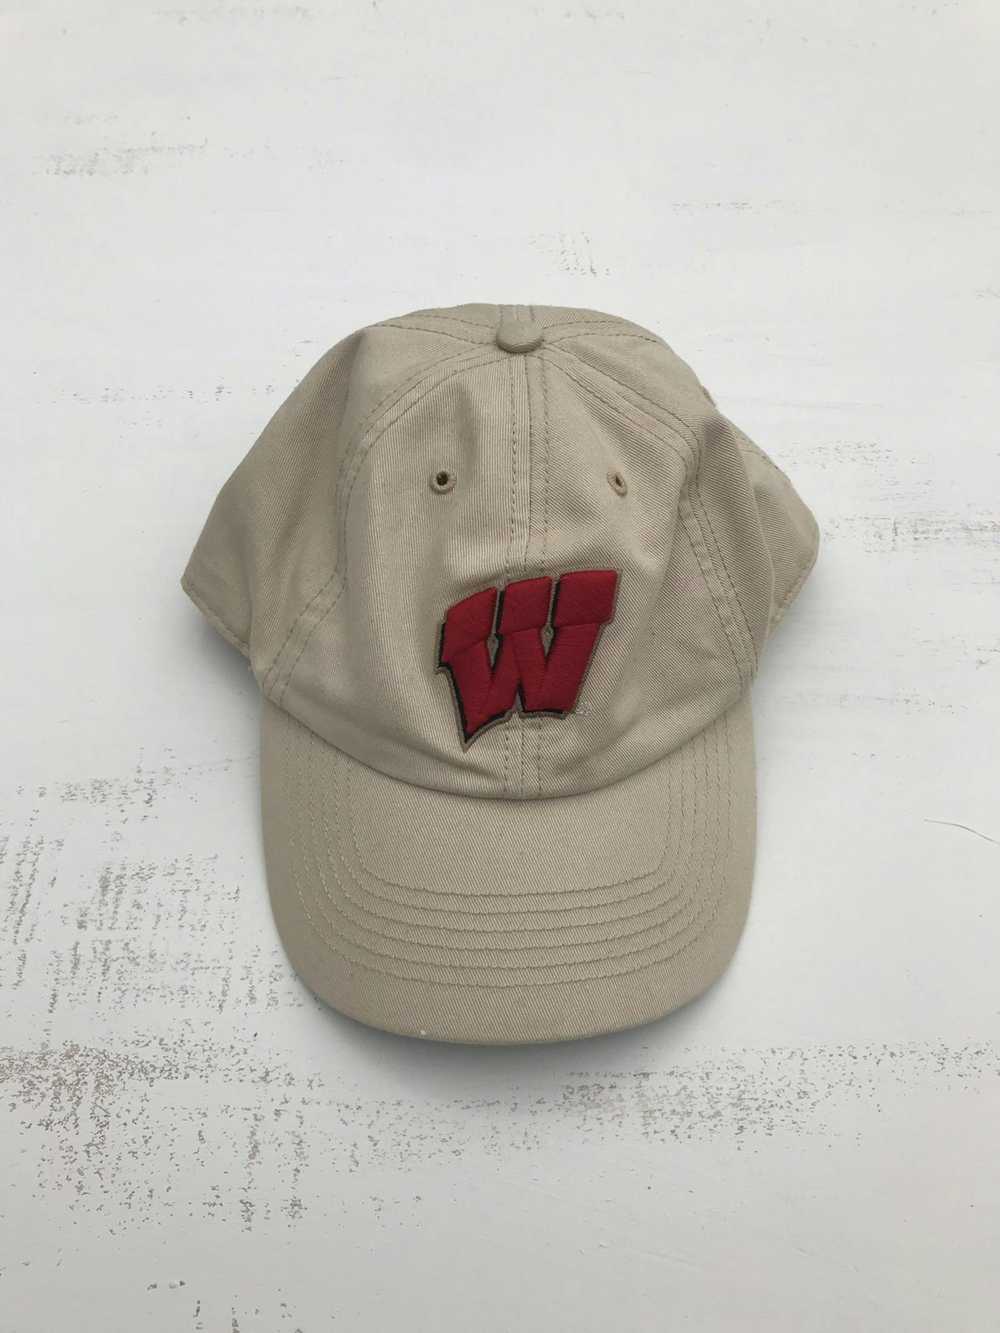 Lids Wisconsin baseball cap - image 1